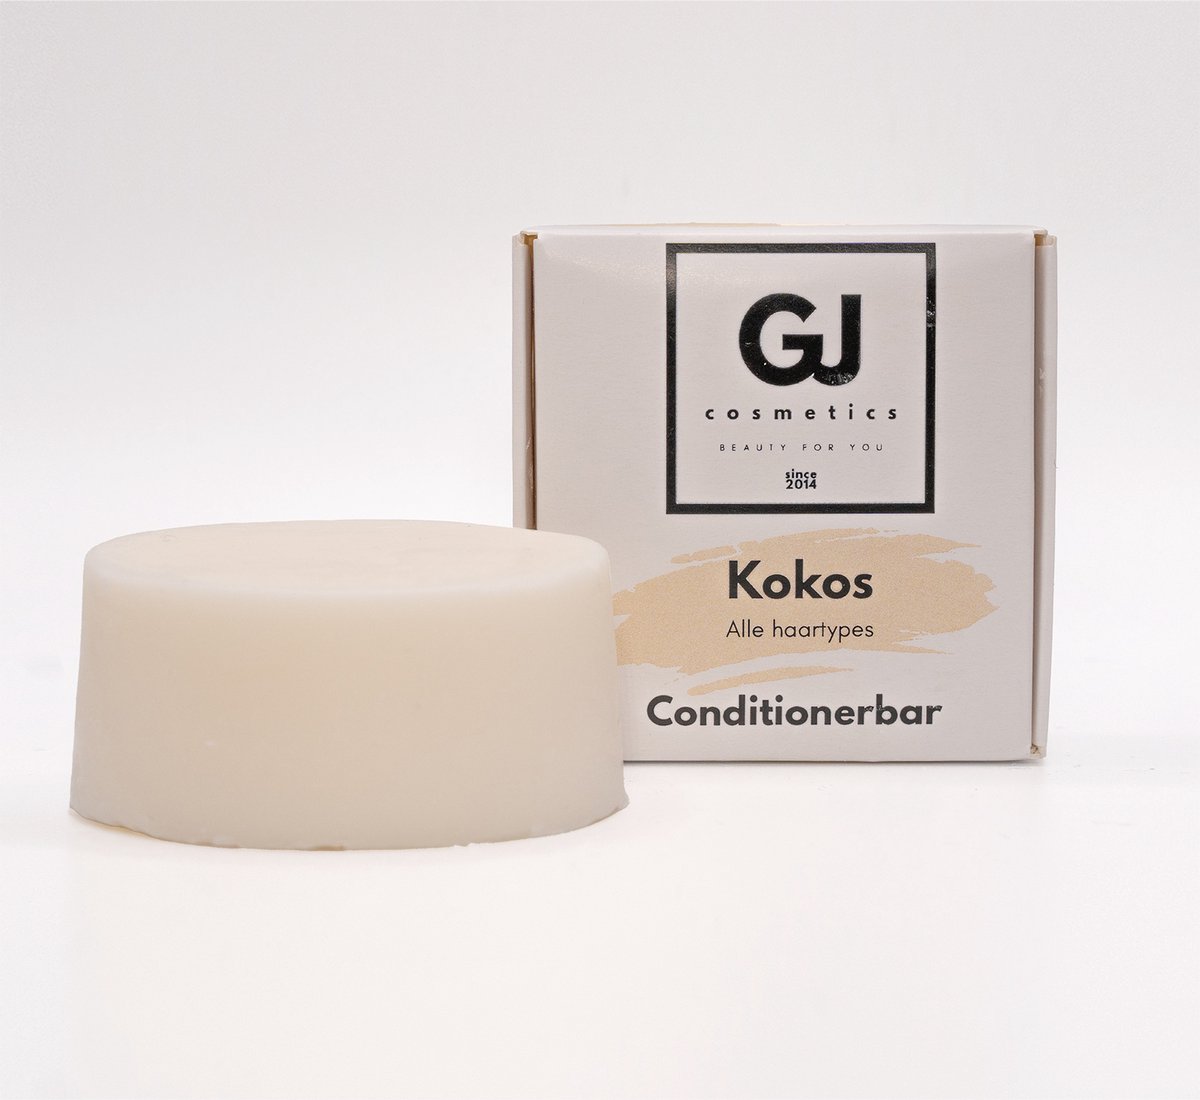 GJ Cosmetics Conditionerbar Kokos